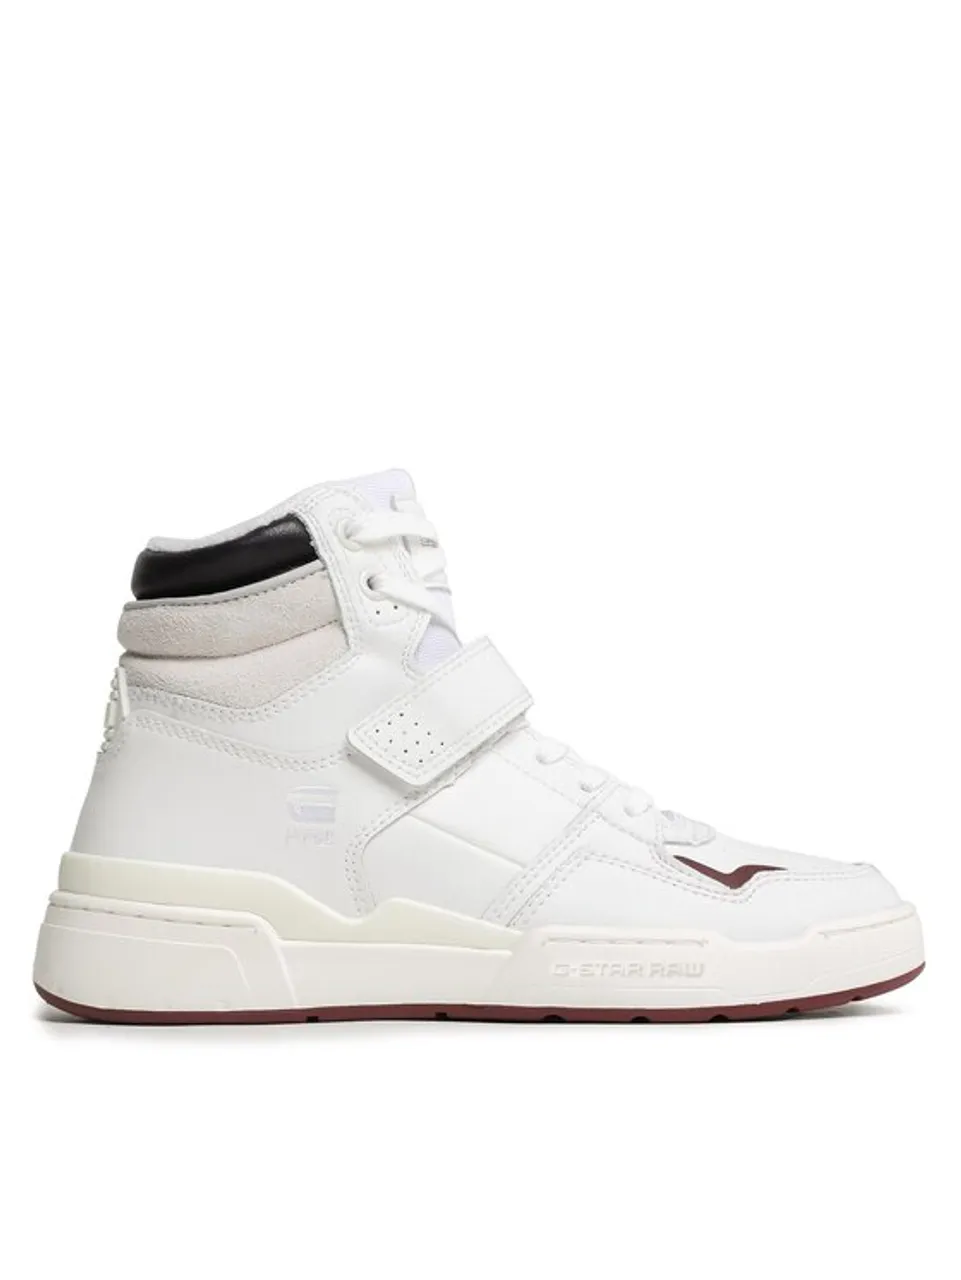 G-Star Raw Sneakers Attacc Mid Lea W 2211 40708 Weiß